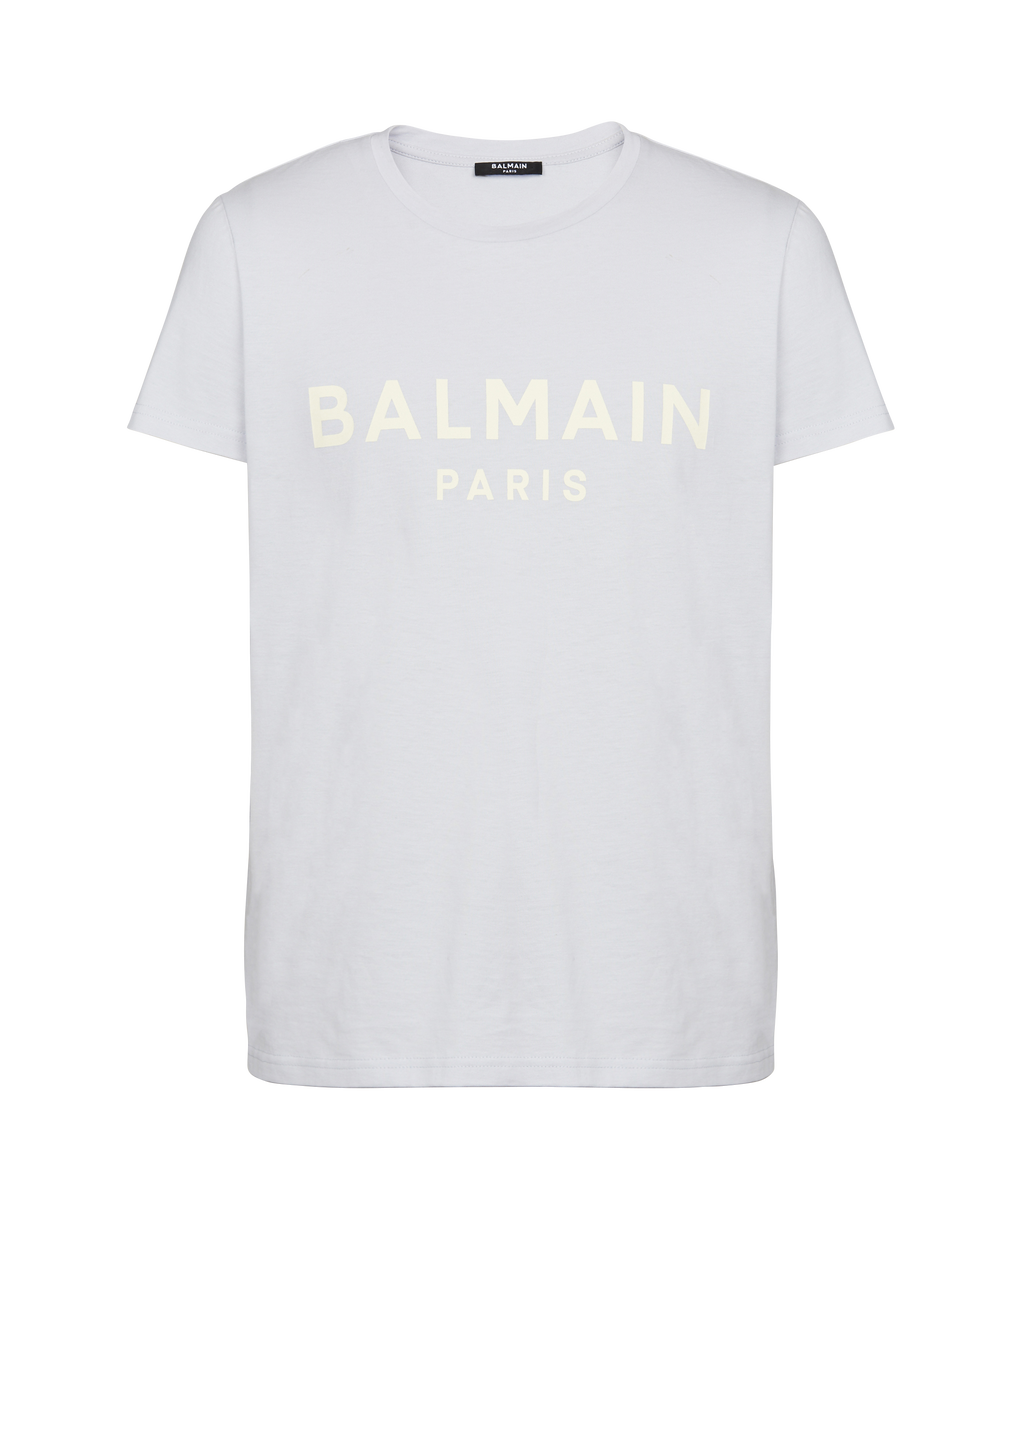 Cotton printed Balmain Paris logo T-shirt, blue, hi-res